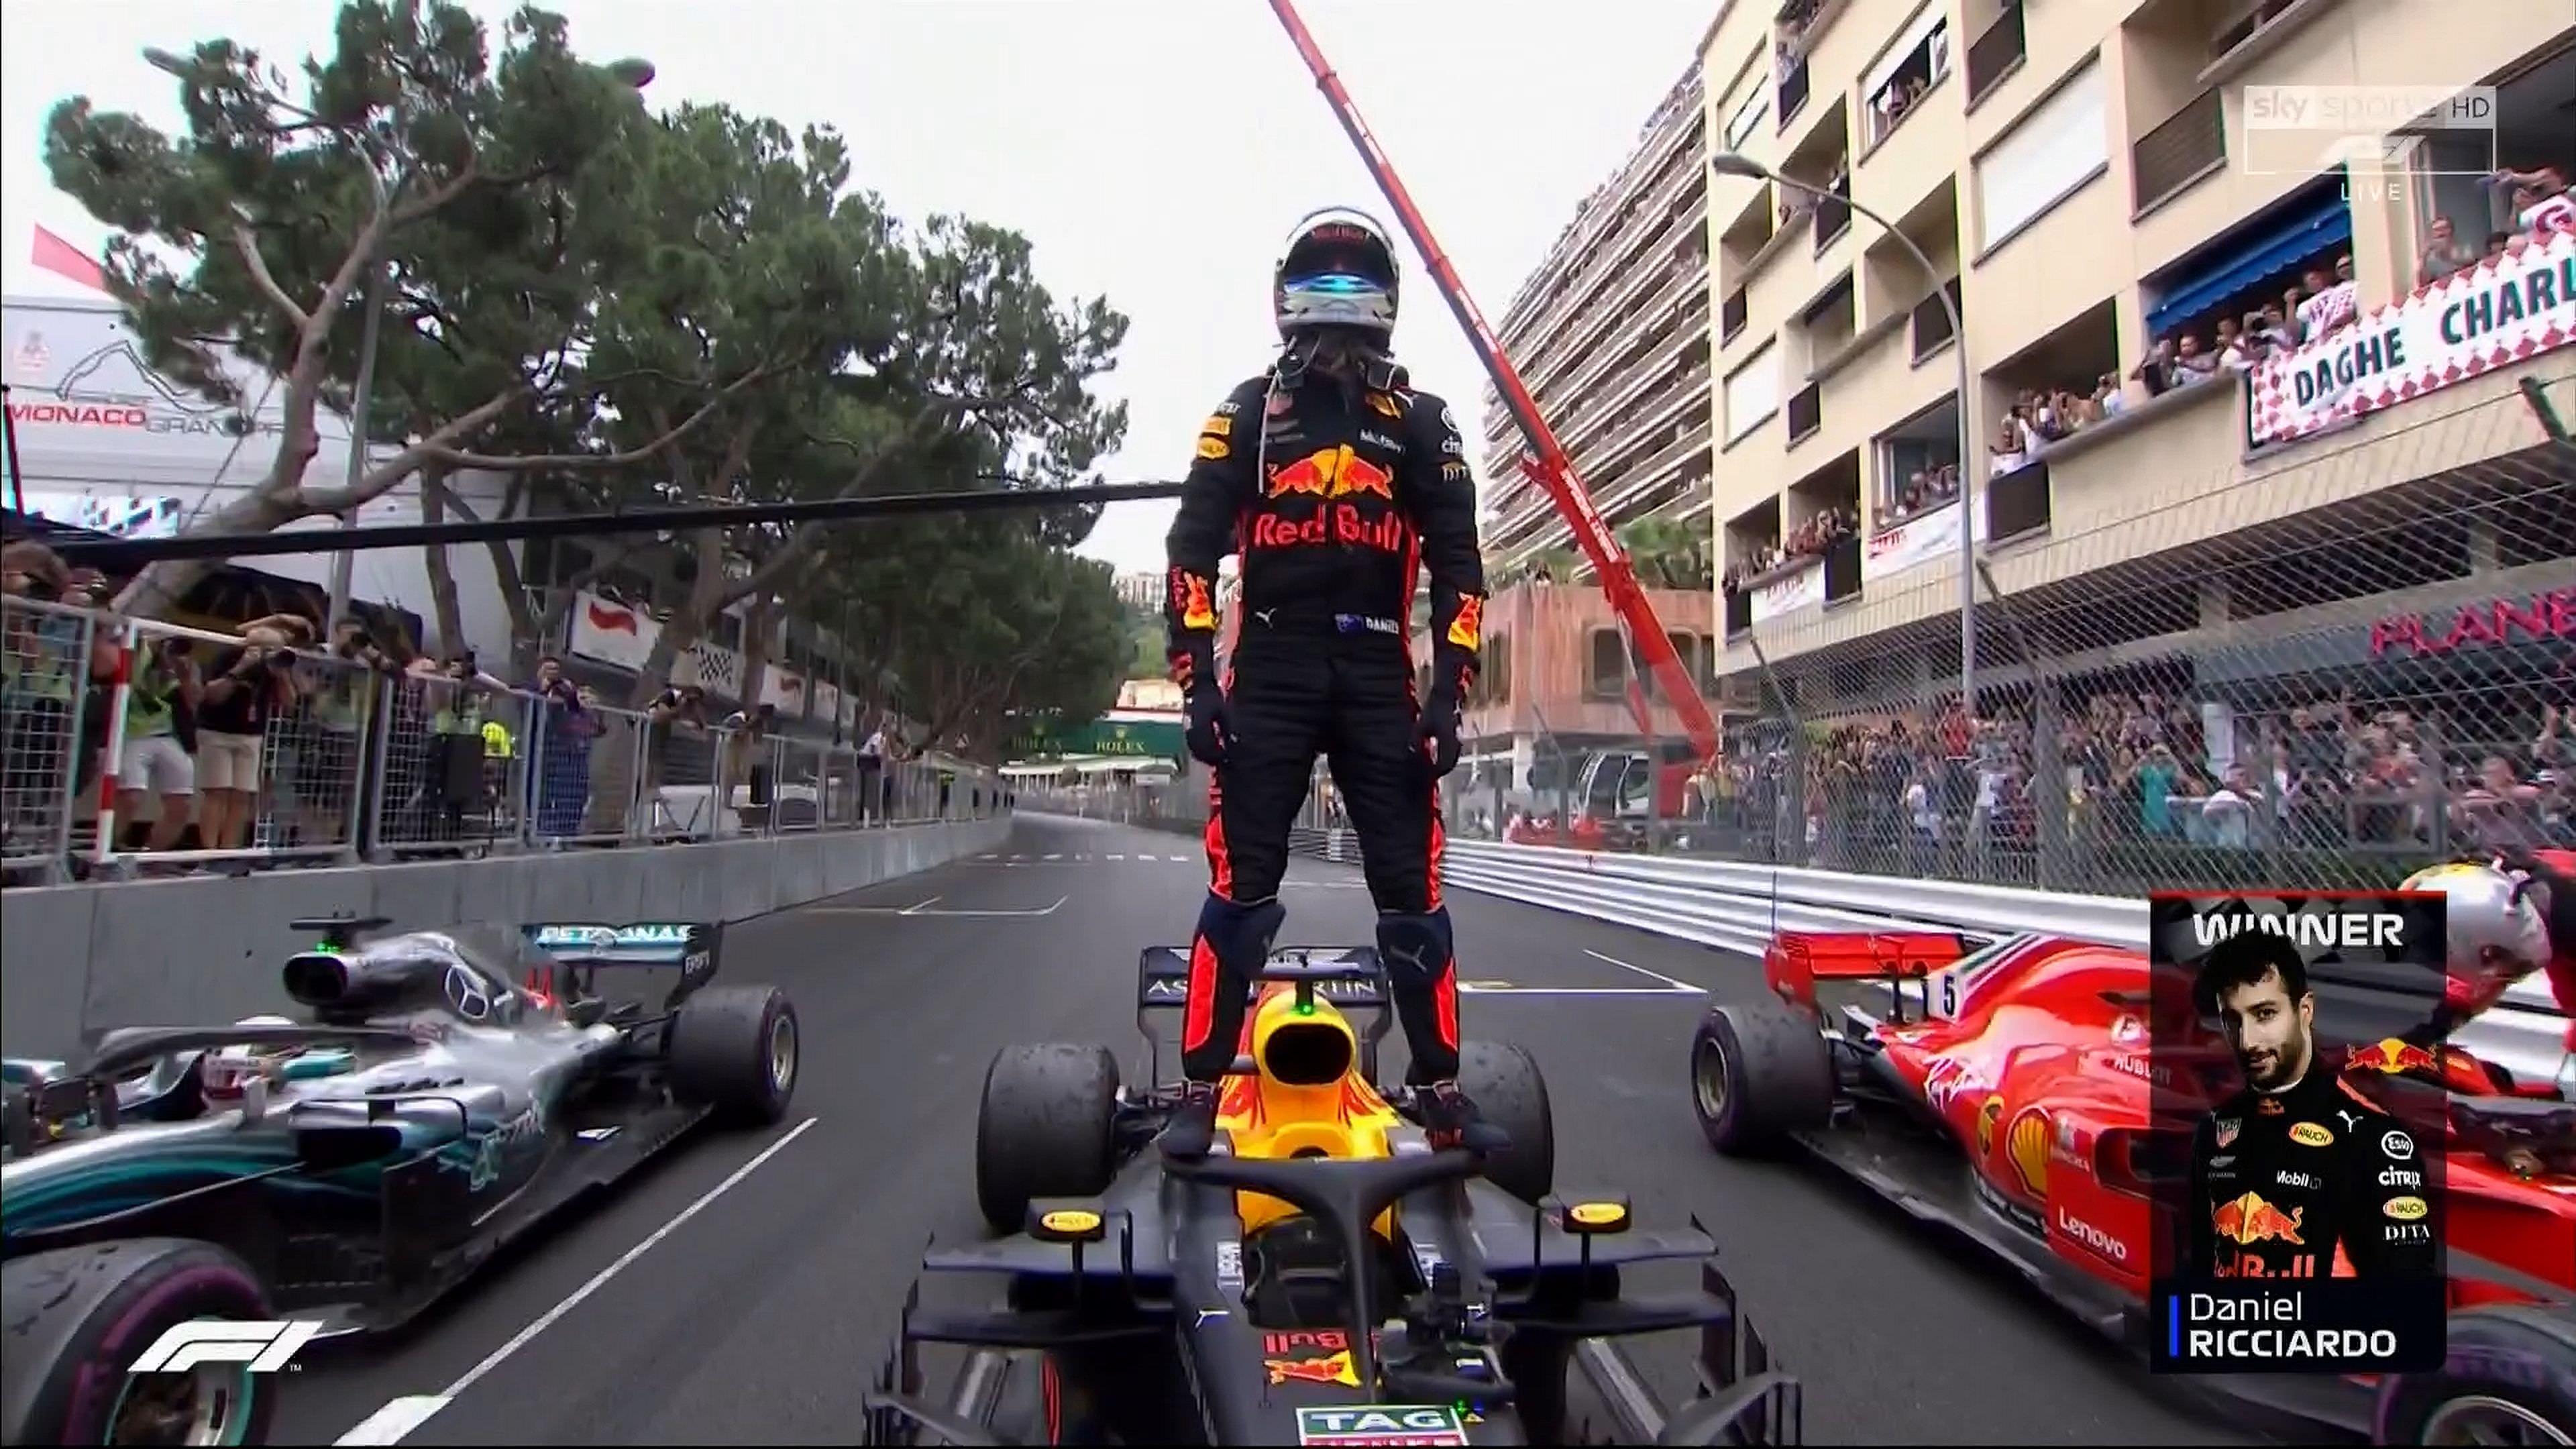 Wallpaper: Daniel Ricciardo stands victorious